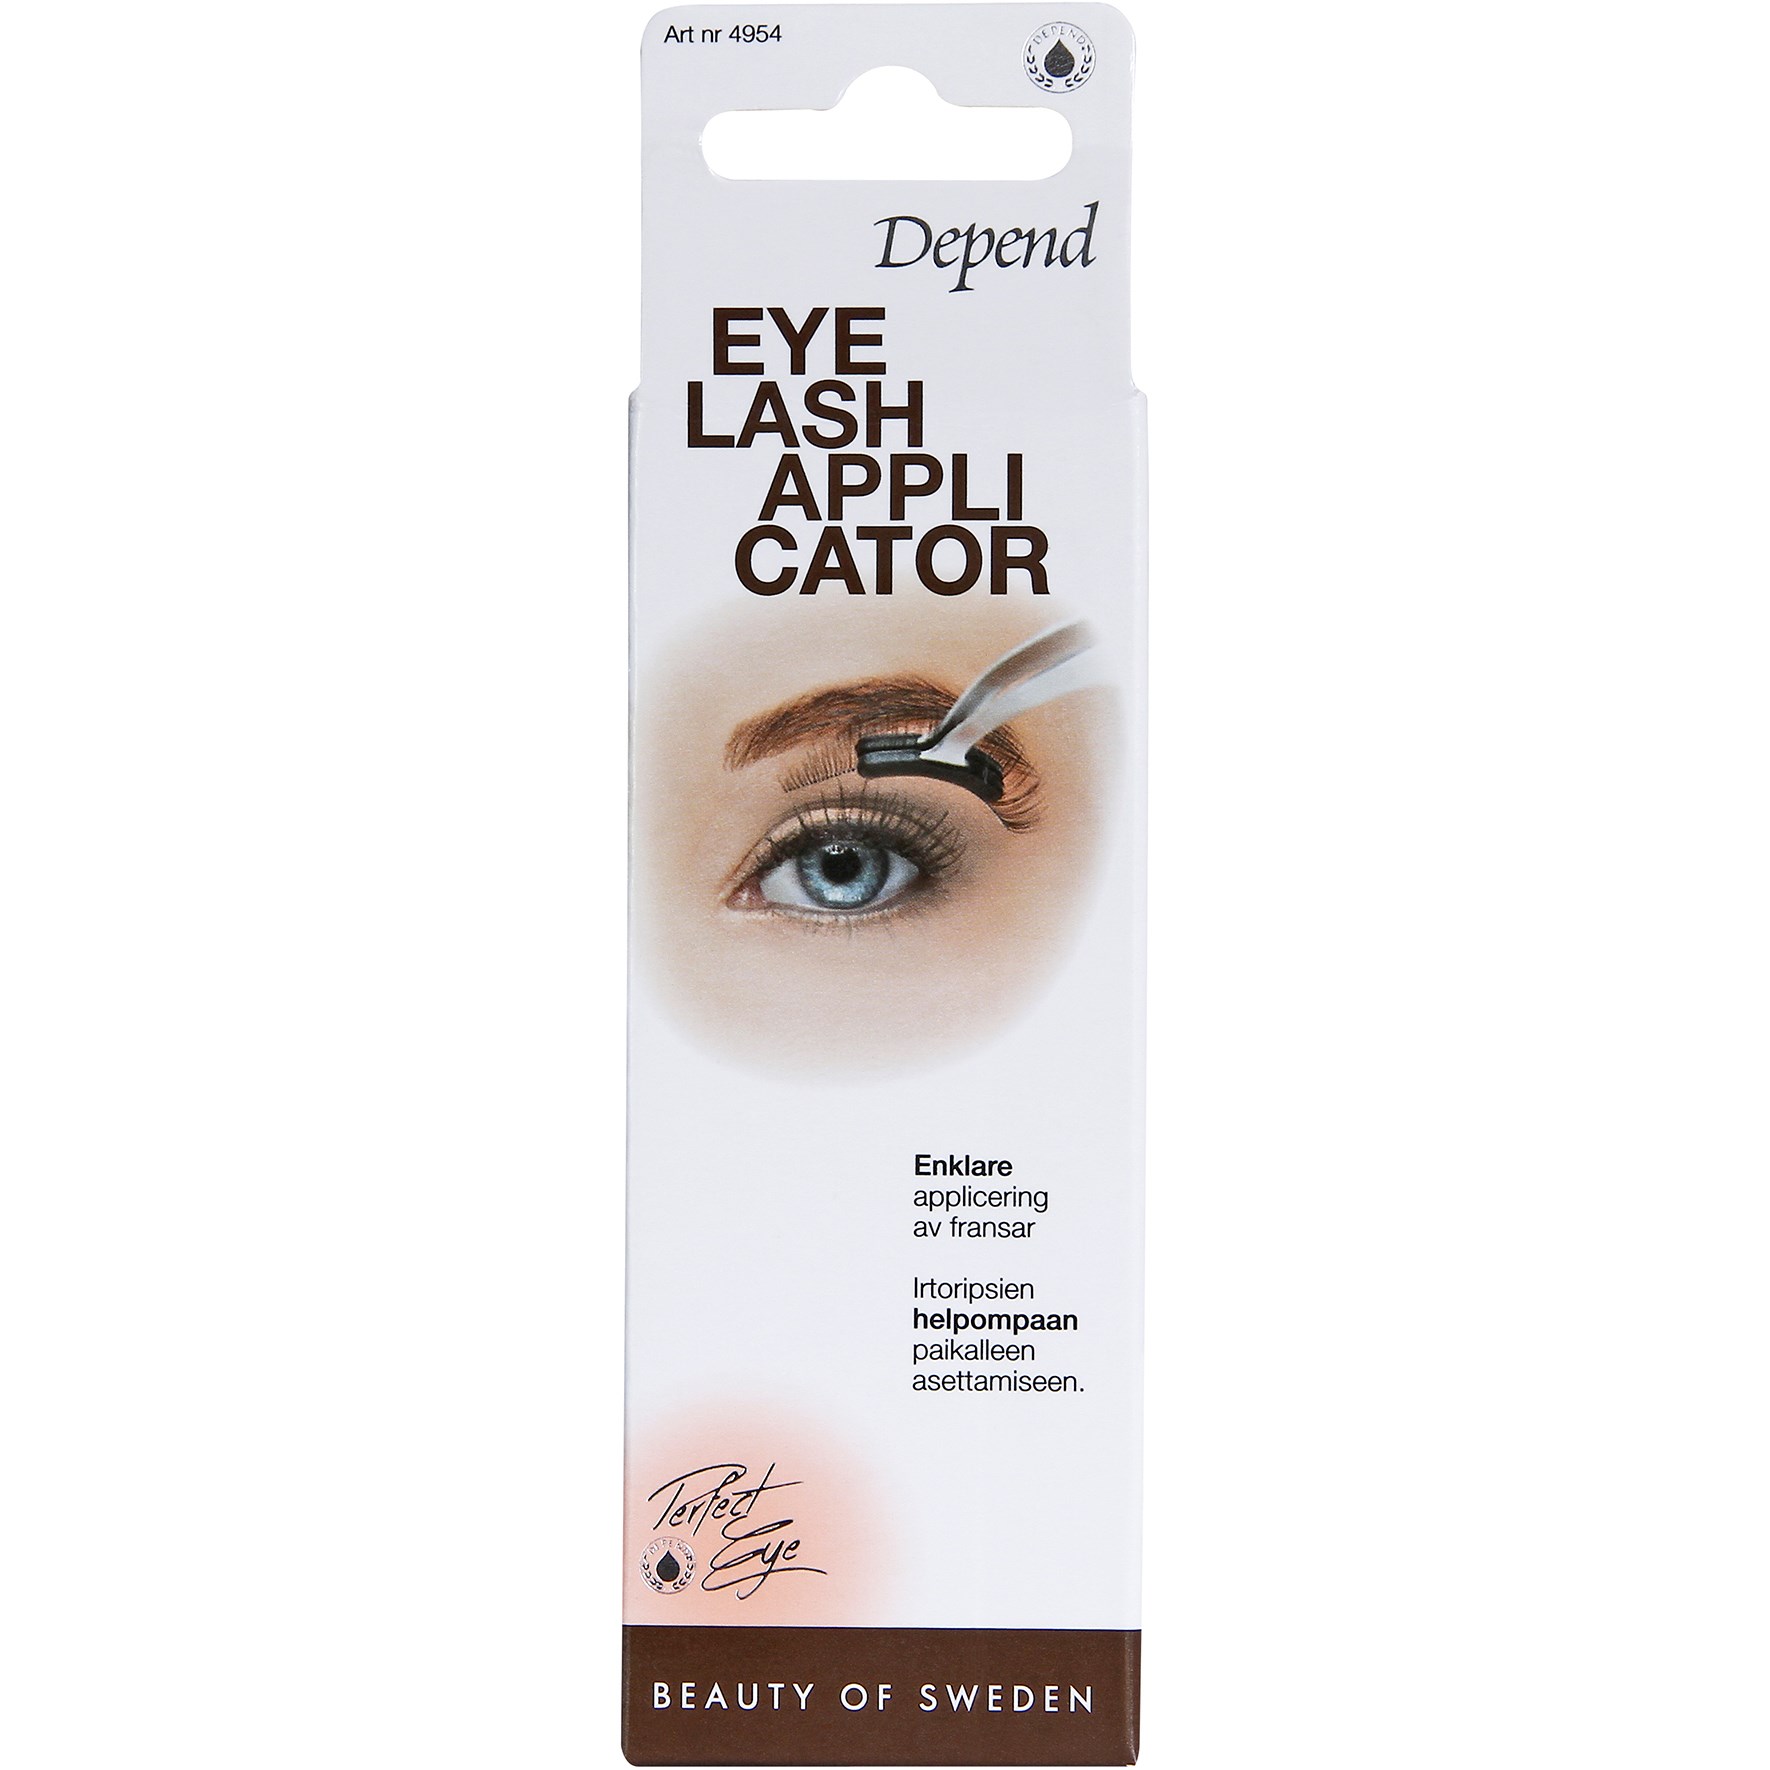 Läs mer om Depend Perfect Eye Eyelash Applicator